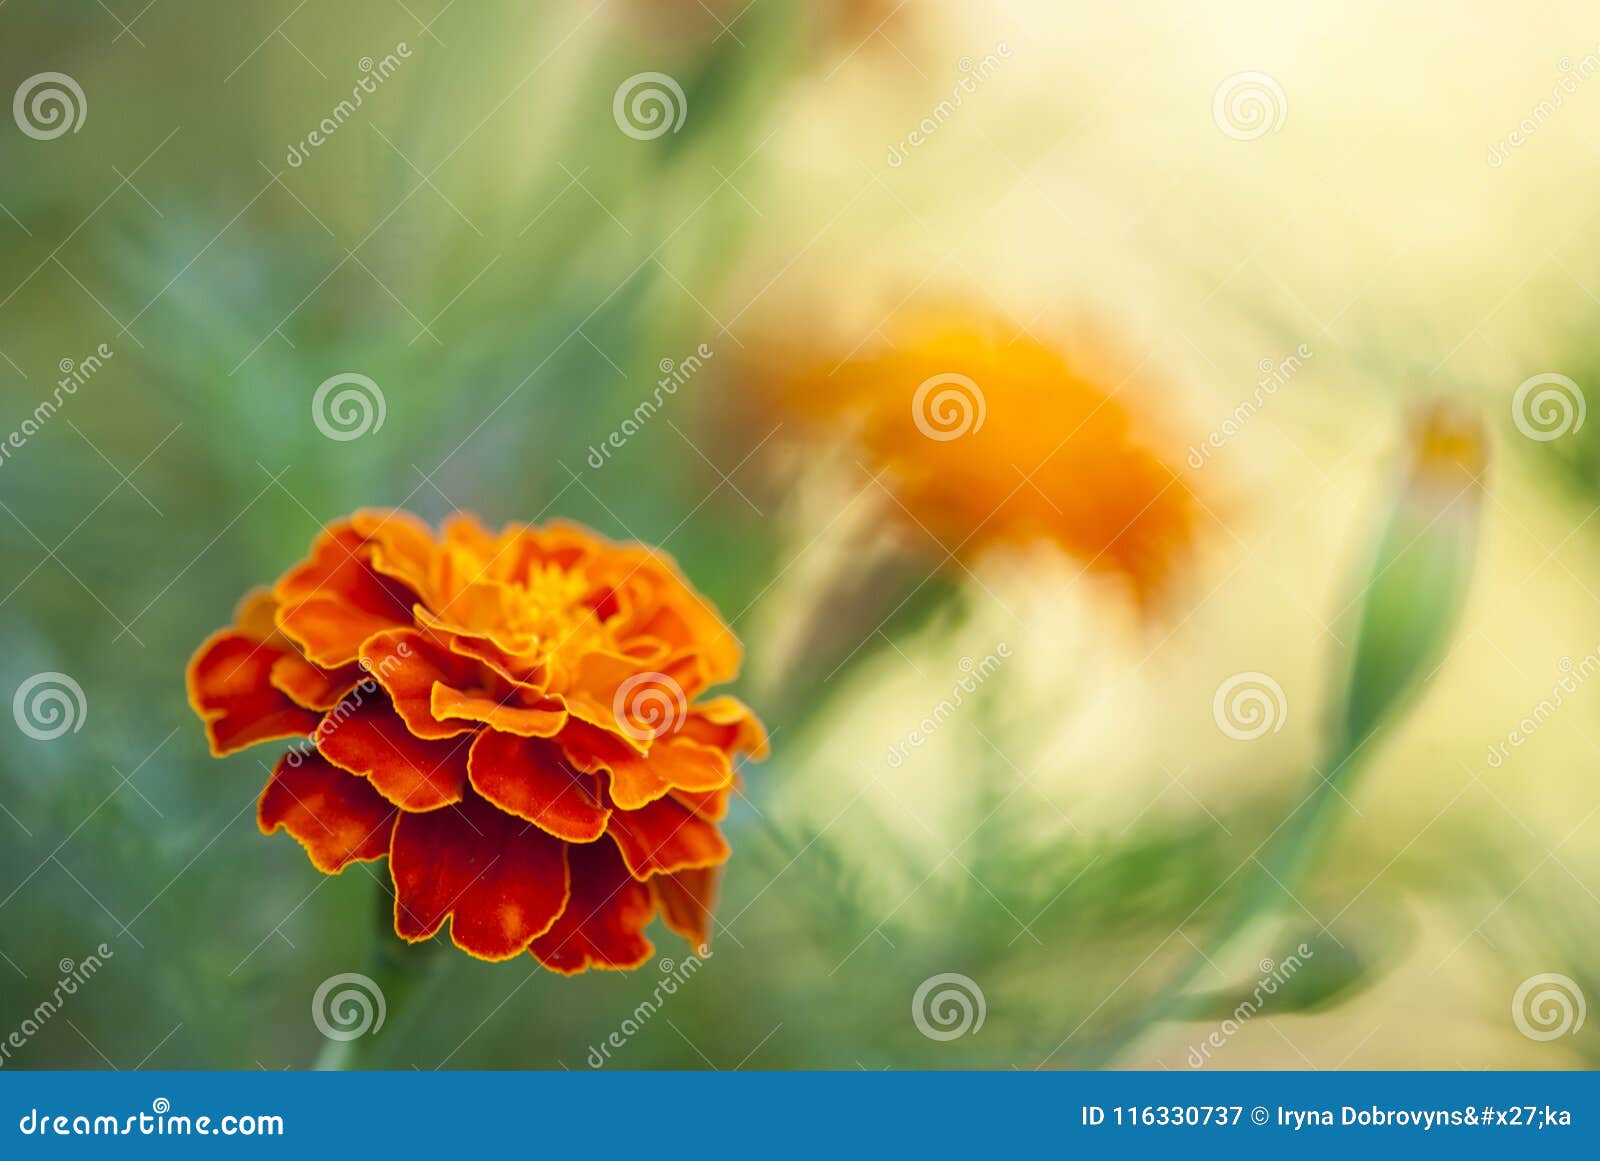 Marigold flowers background.